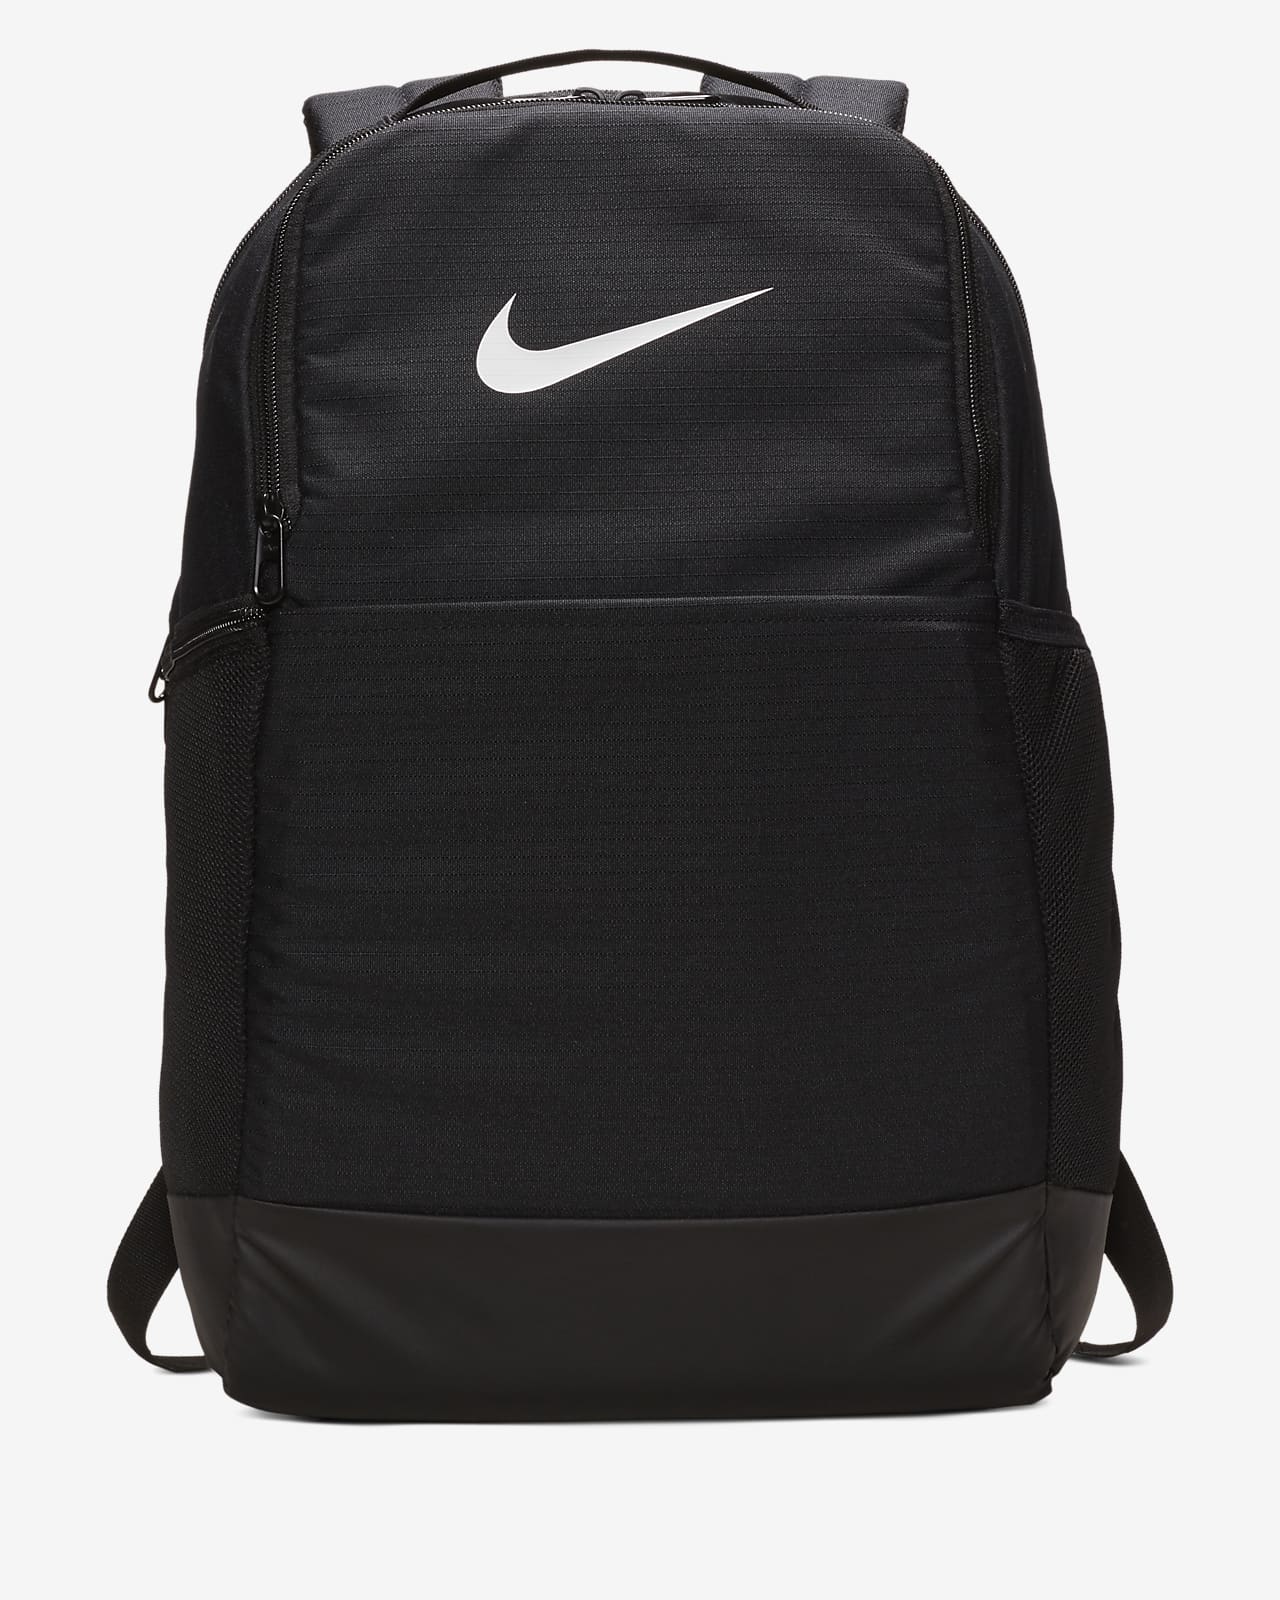 Nike Brasilia Training Backpack (Medium). Nike LU